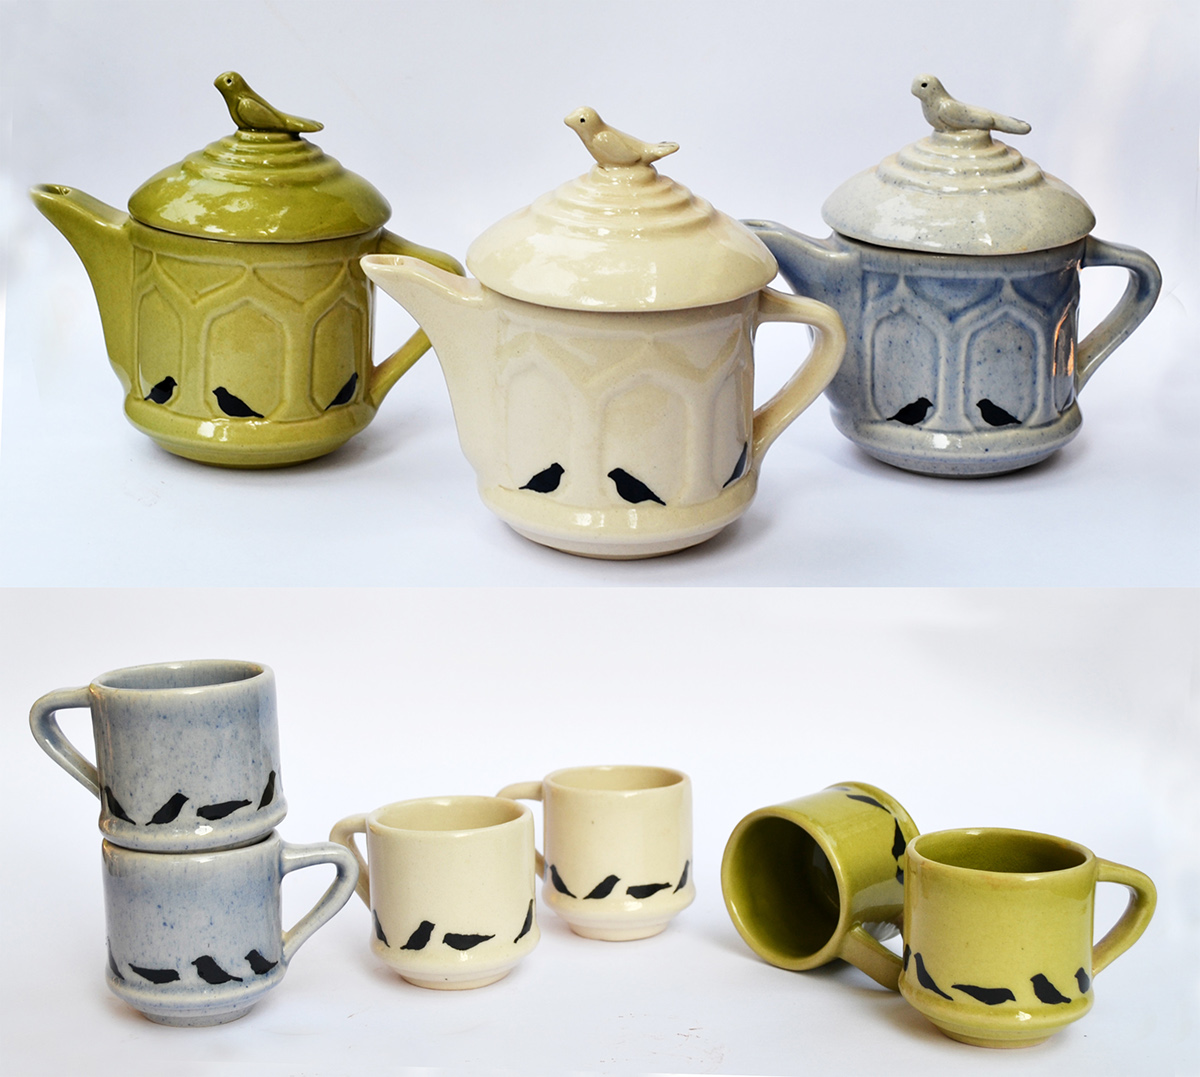 souvenir small cups small kettle TEA SET two cup set kettle birds ceramics  stoneware tableware decore utility tea chai